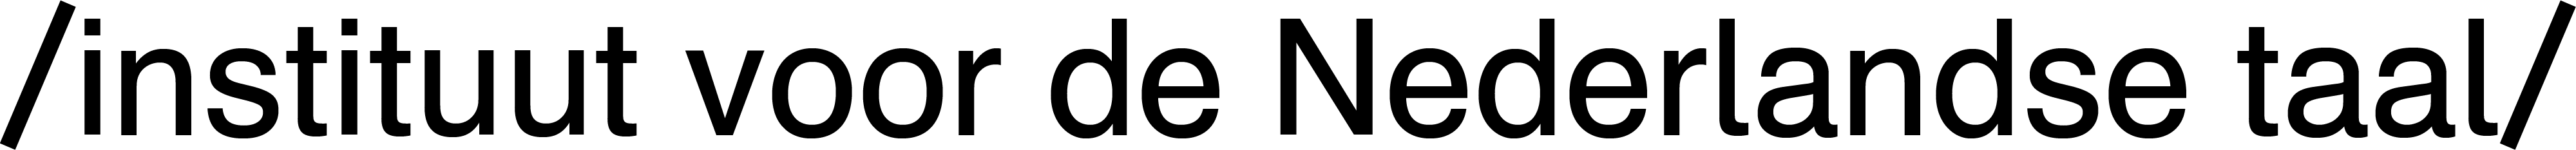 IvdNT logo